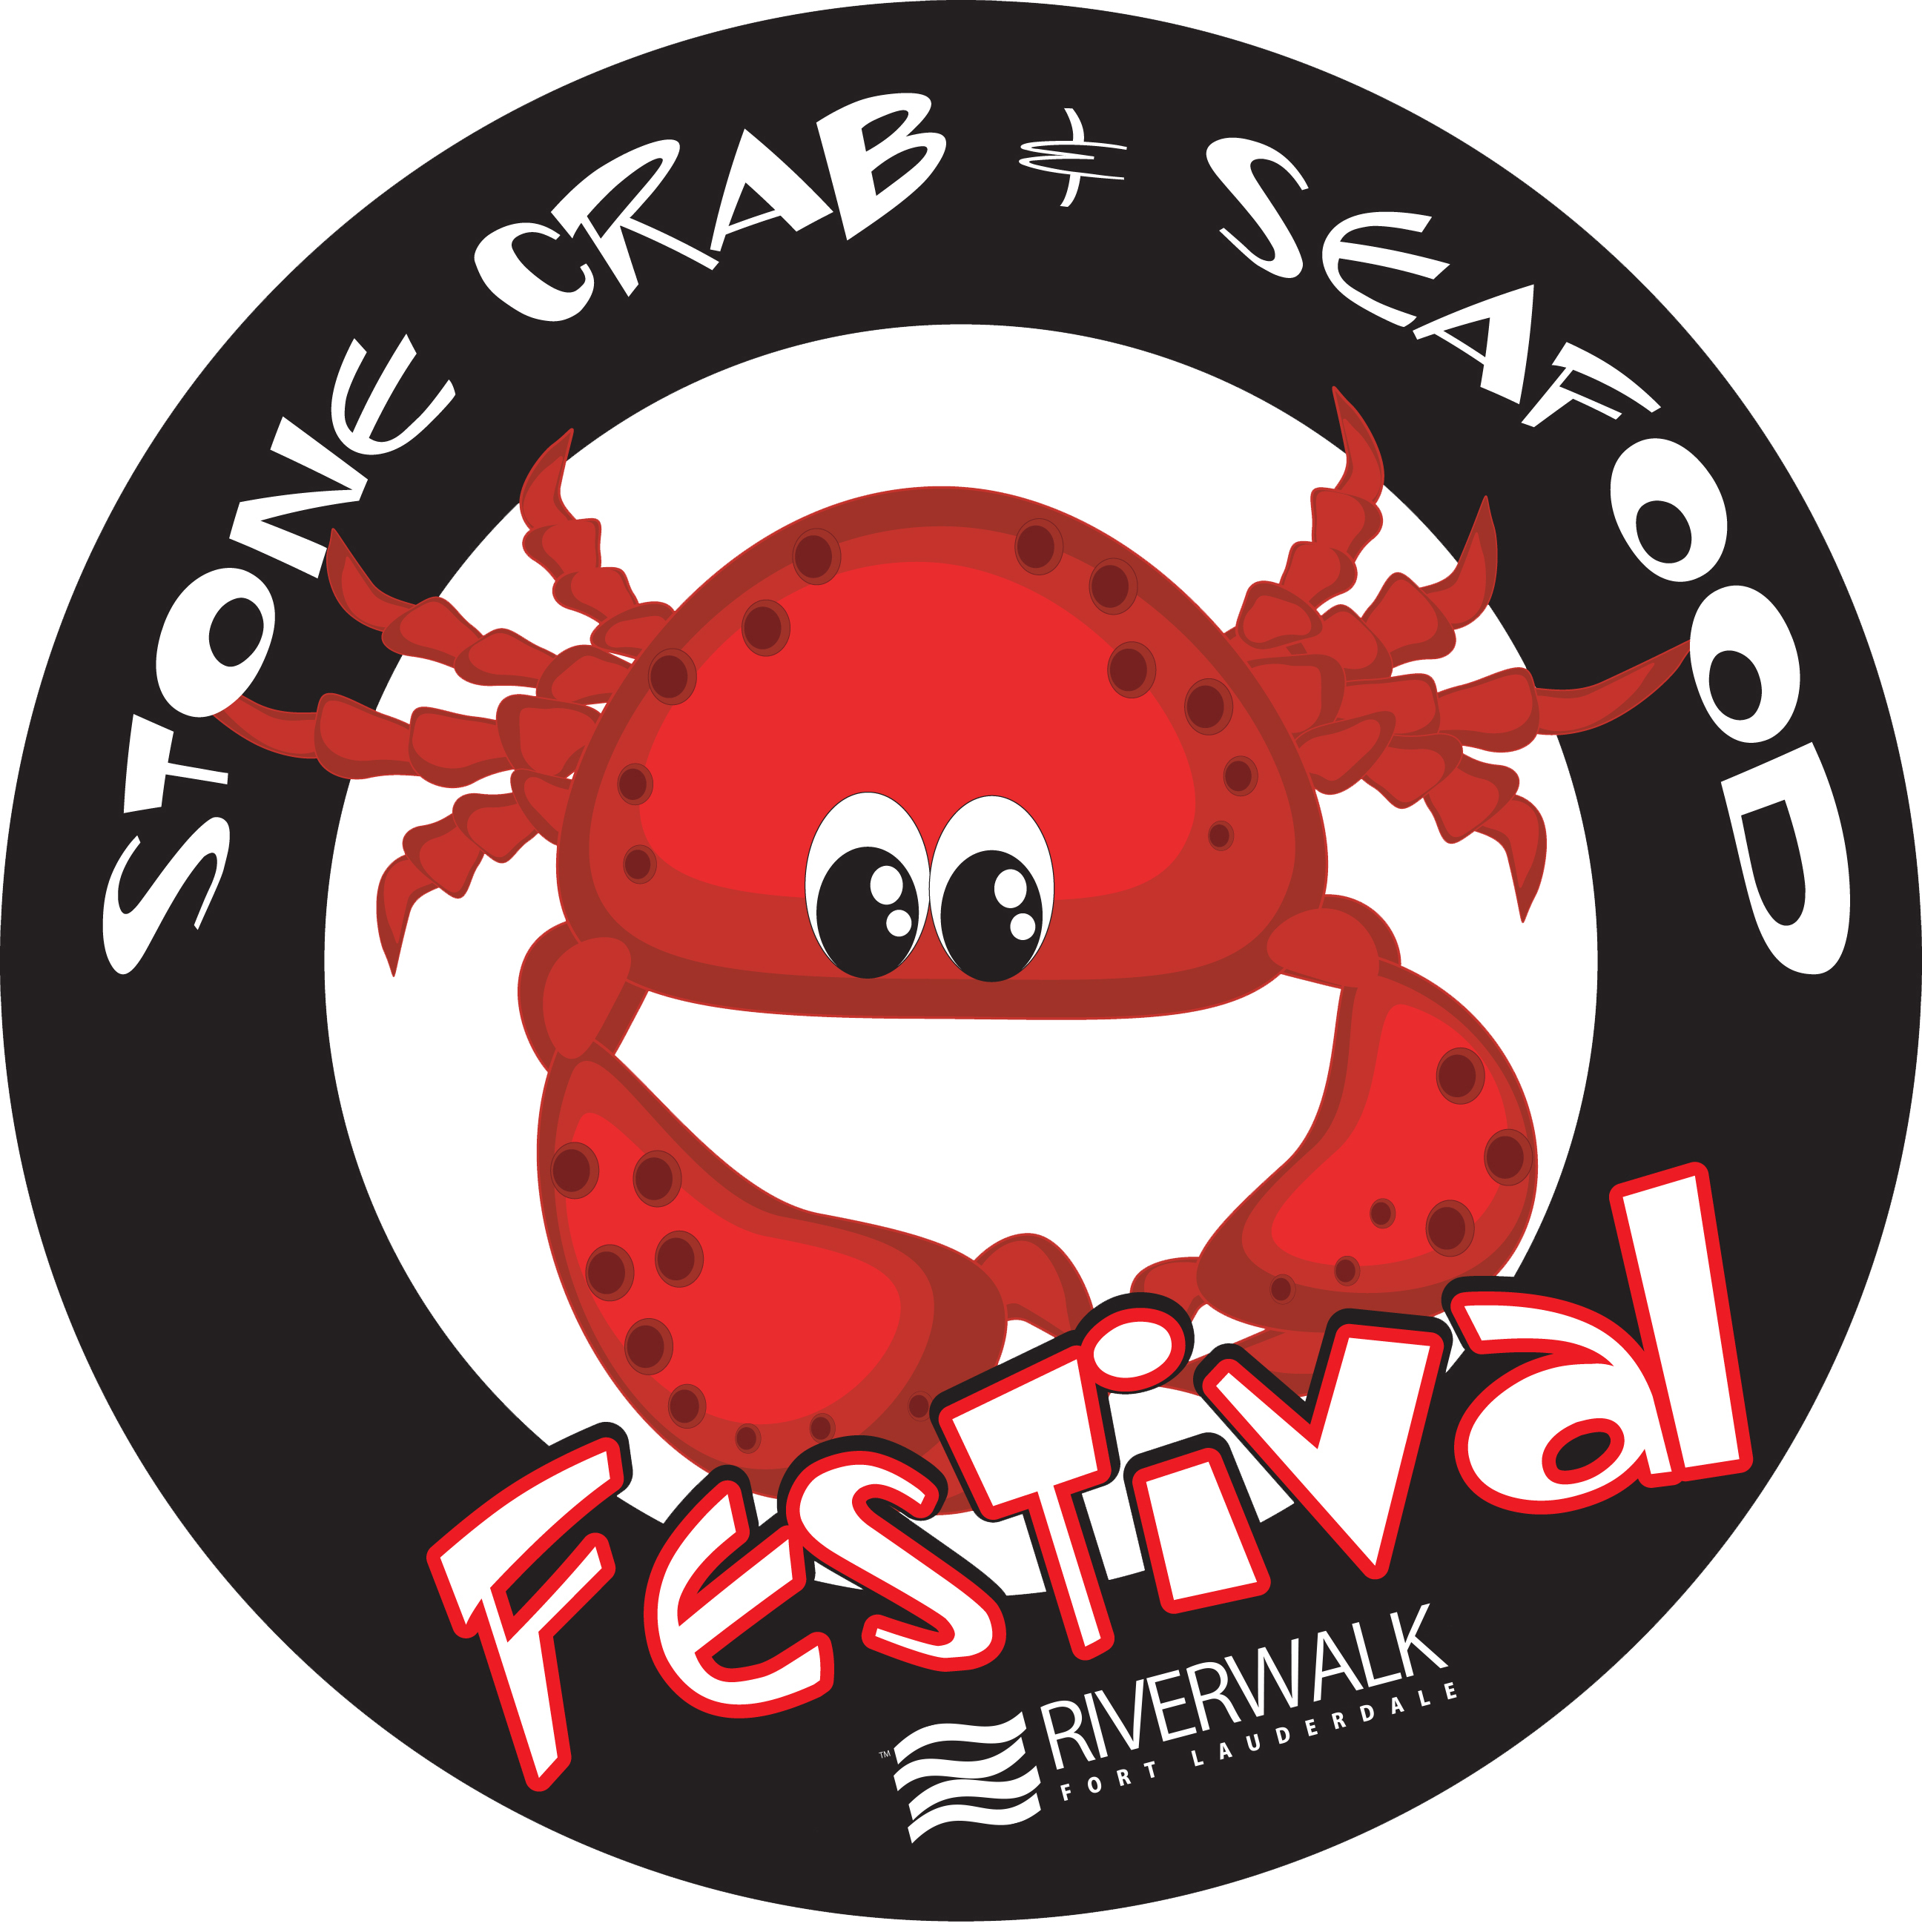 6th annual Stone Crab & Seafood Festival